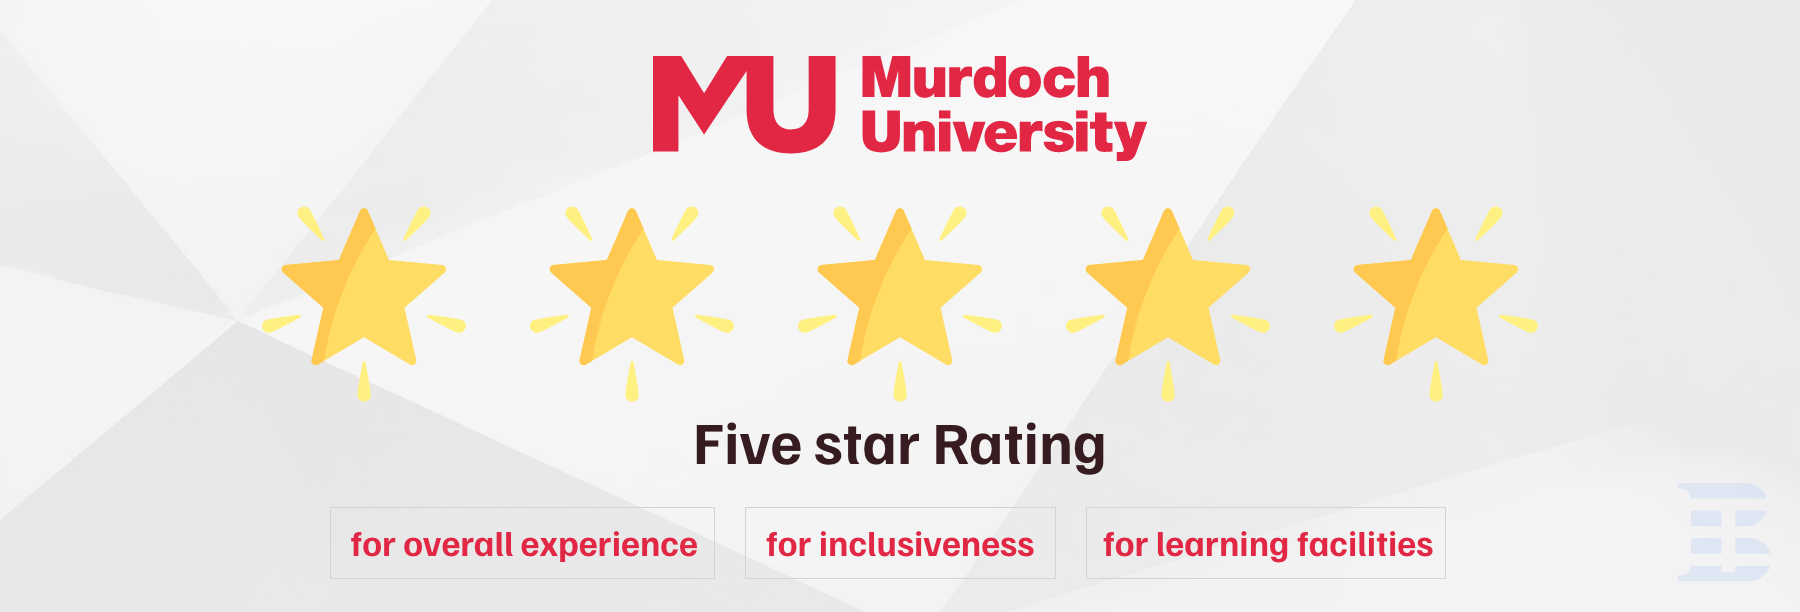 Murdoch University Dubai Accreditation and Rankings